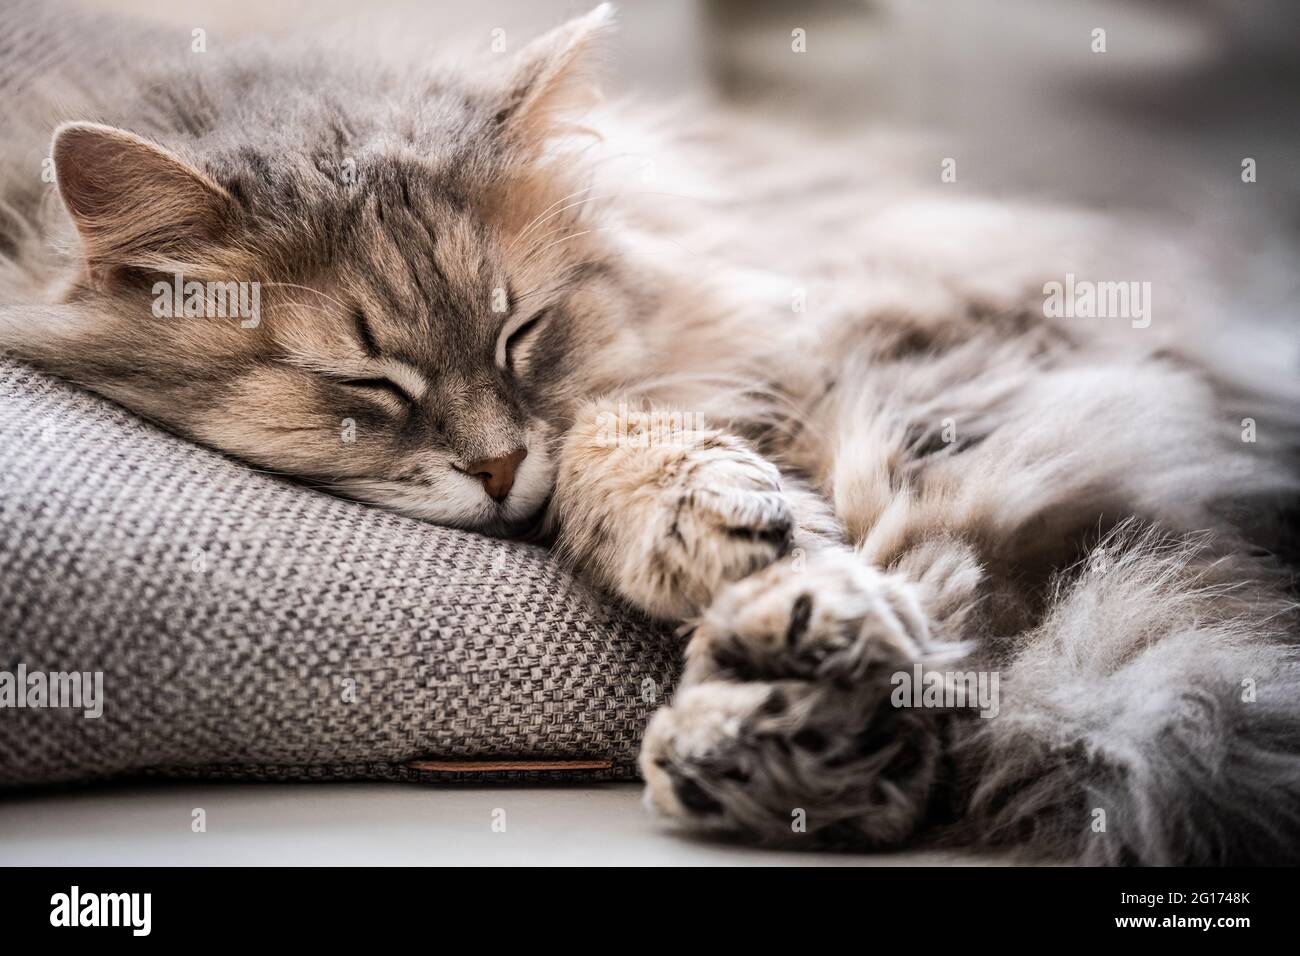 Beautiful cat sleeping on pillow Stock Photo - Alamy